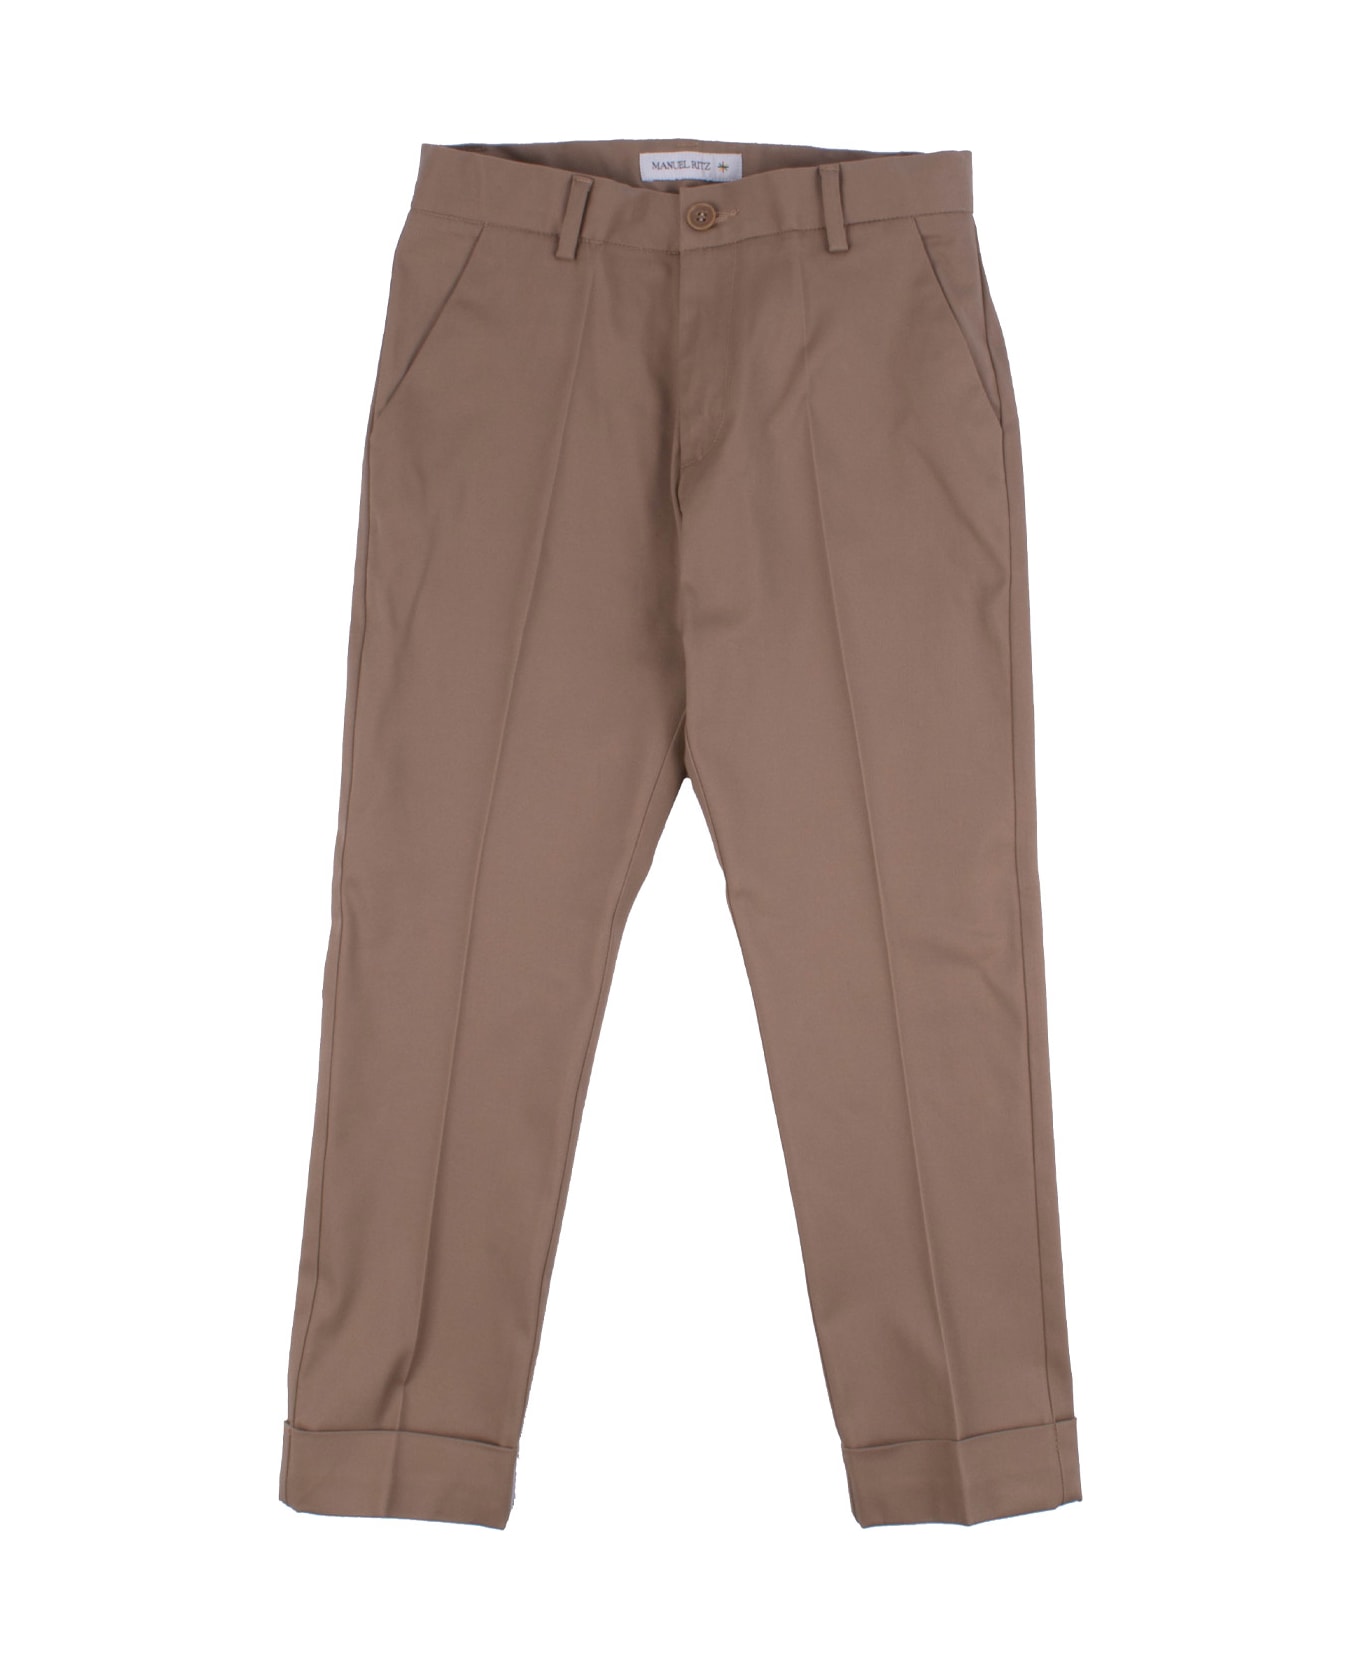 Manuel Ritz Cotton Pants - Brown